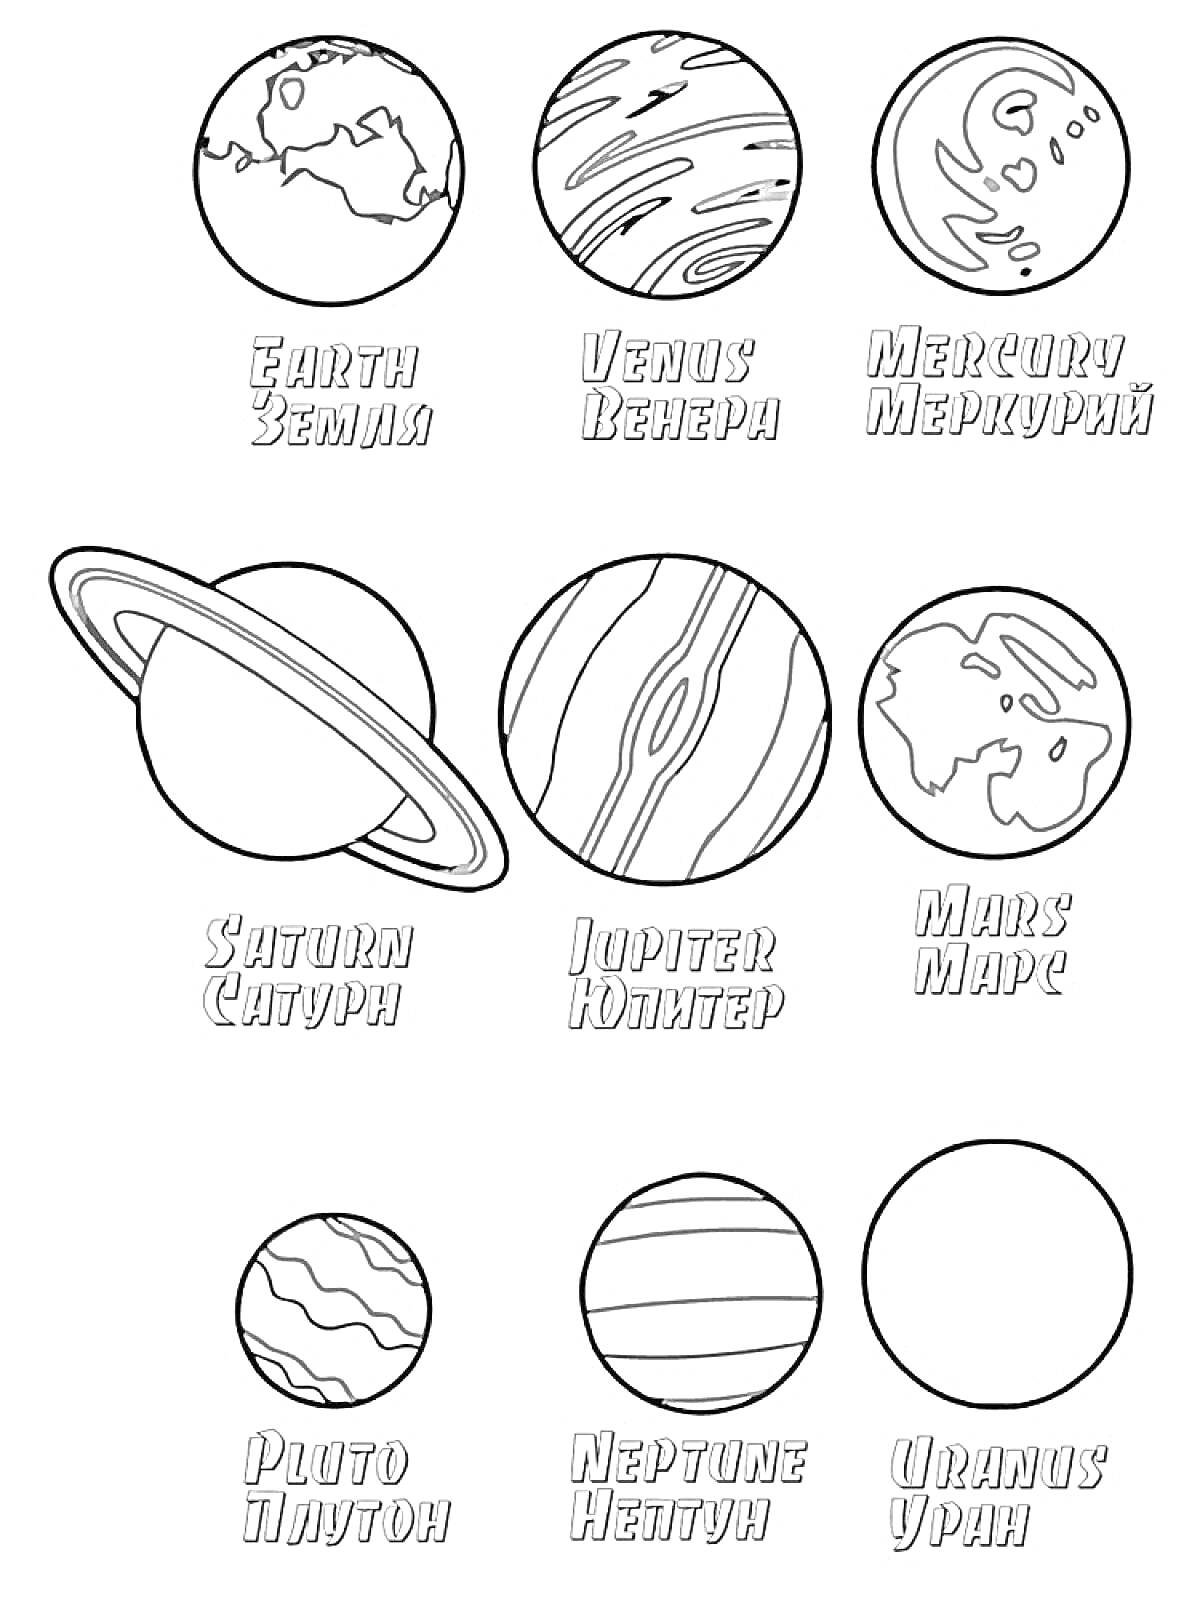 Раскраска Солнечная система с планетами : Земля, Венера, Меркурий, Сатурн, Юпитер, Марс, Плутон, Нептун, Уран.